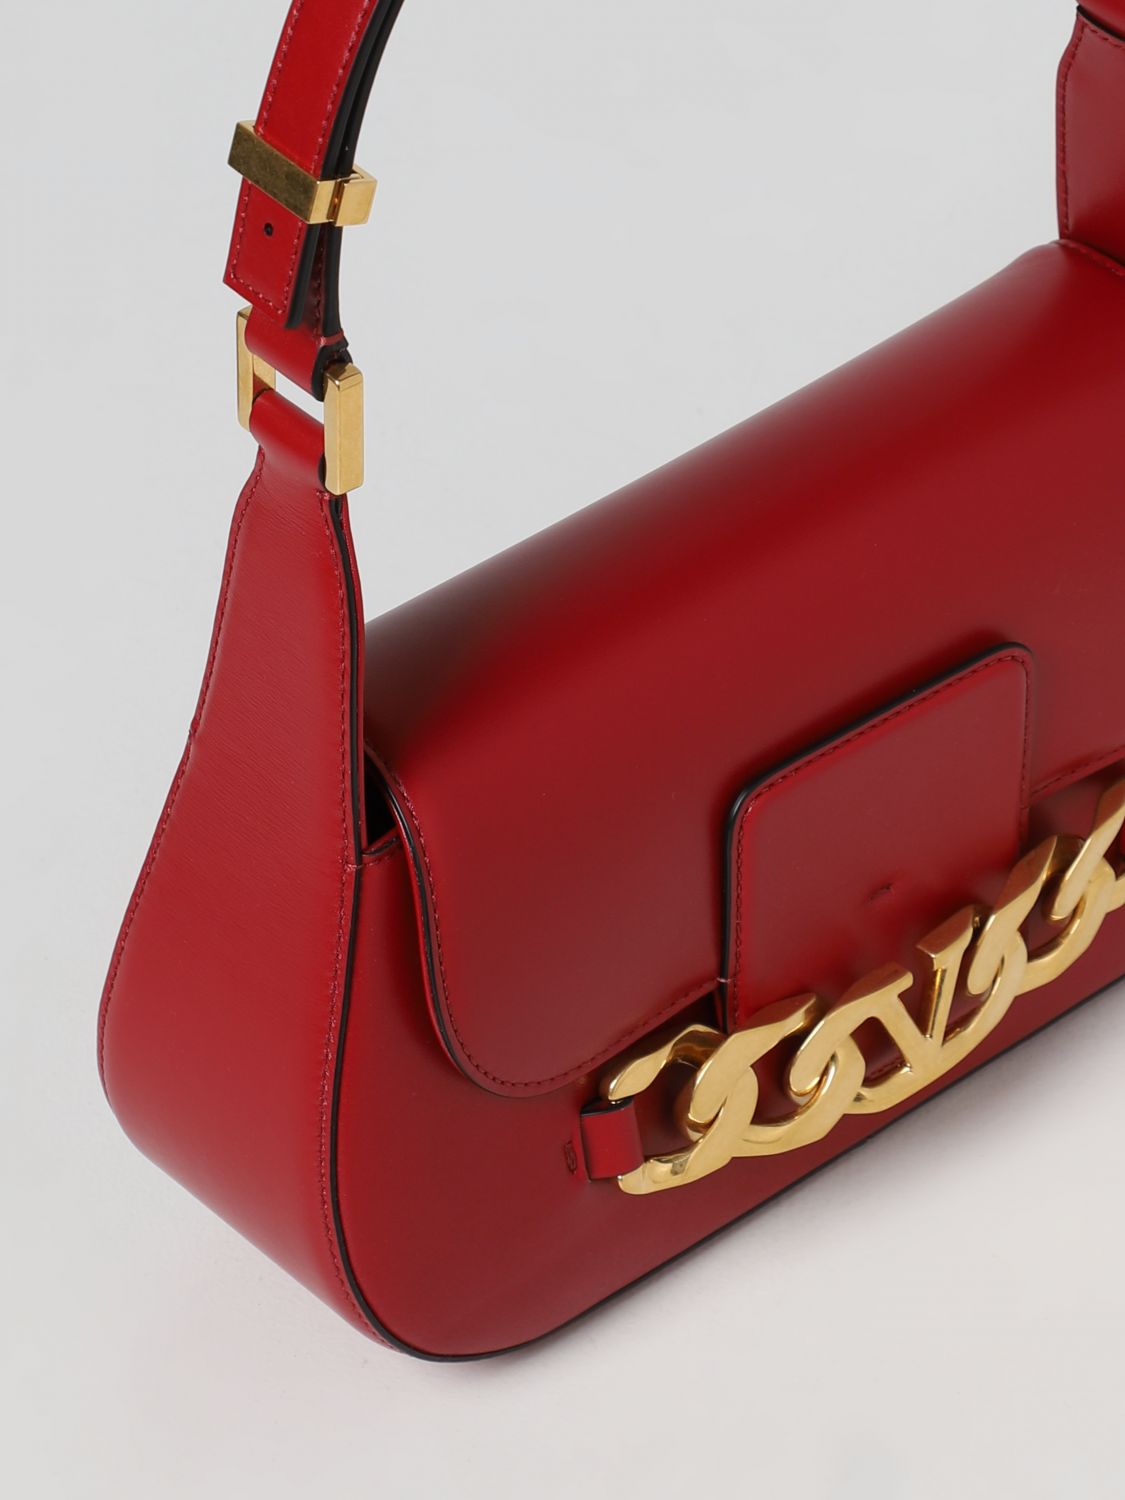 Valentino Garavani, Bags, Authentic Womans Red Valentino Cluthshoulder Bag